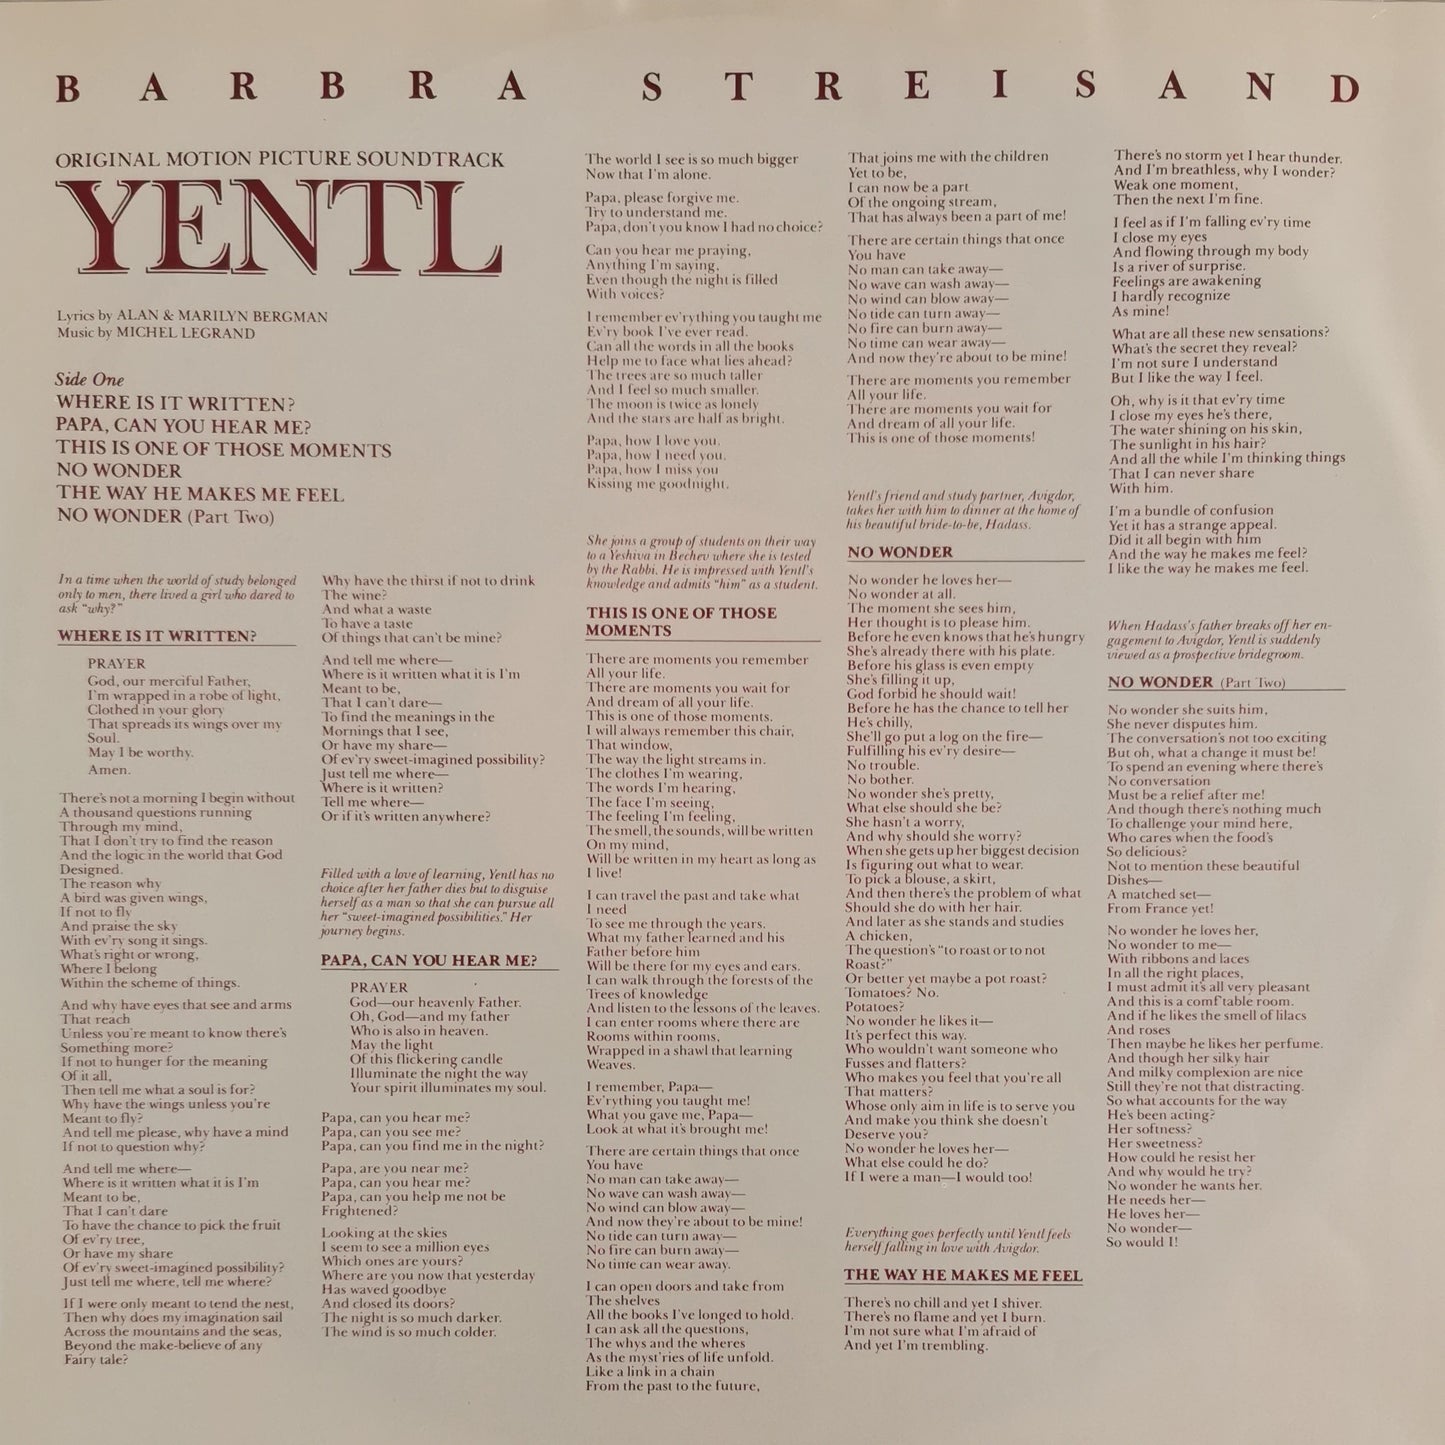 BARBRA STREISAND - Yentl - Original Motion Picture Soundtrack